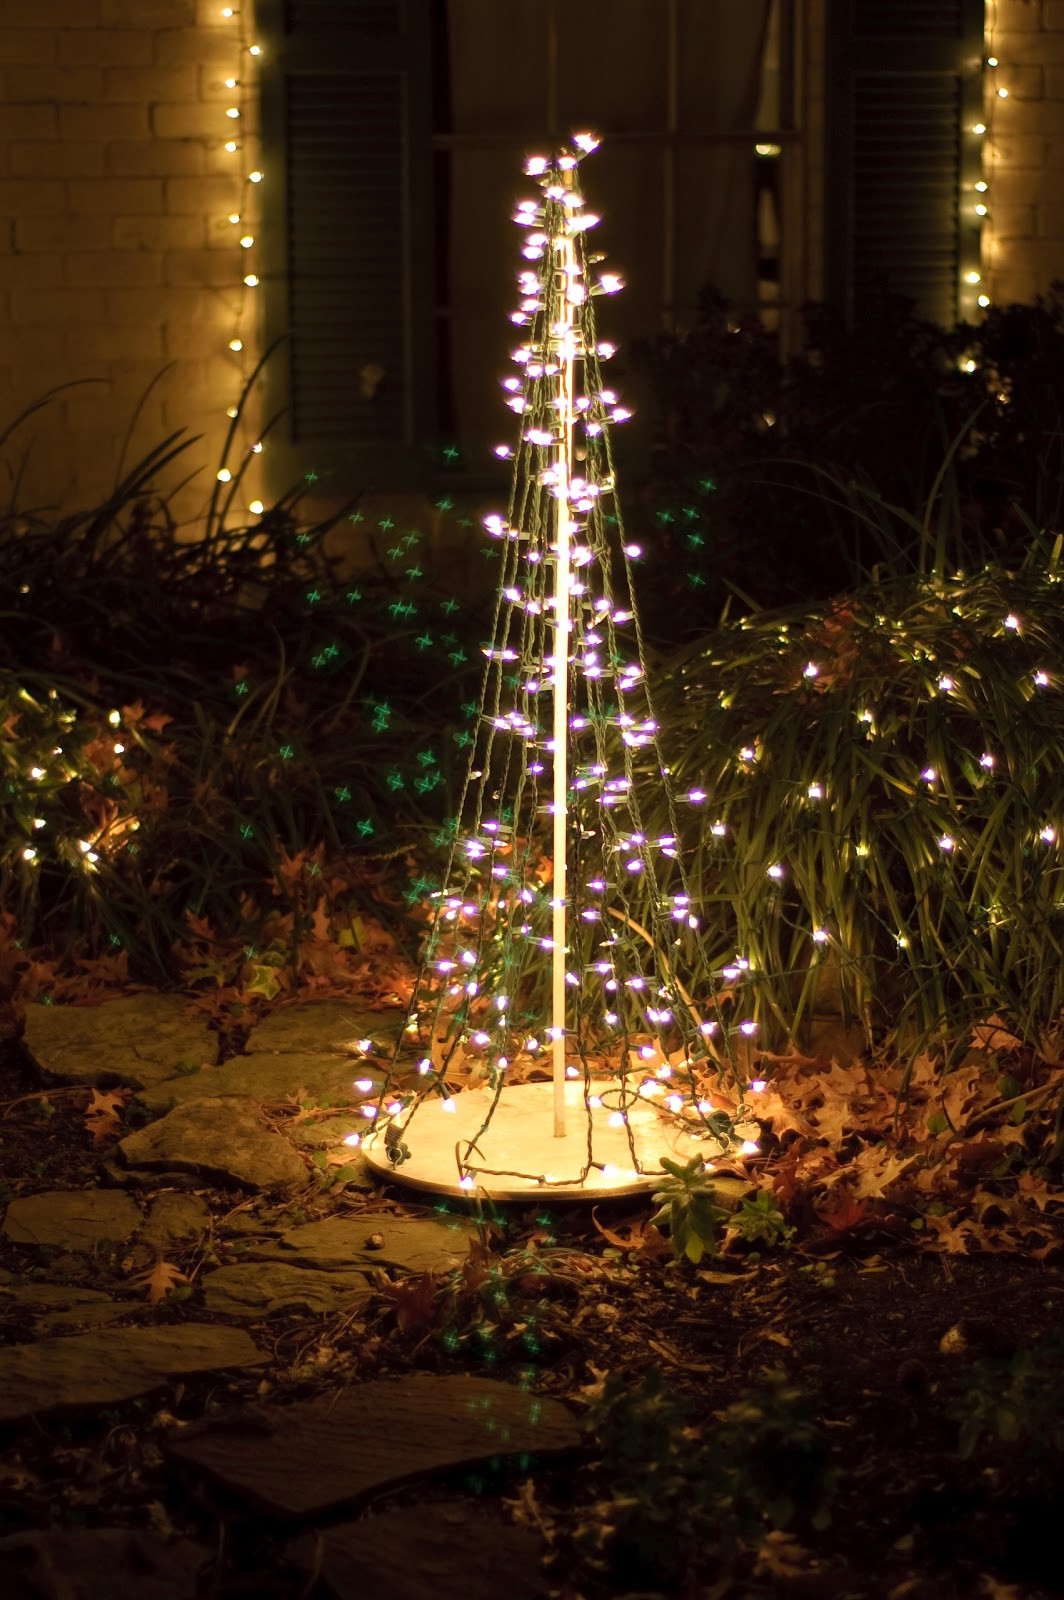 Outdoor Christmas Trees Lights
 Lilybug Designs Outdoor Christmas Tree